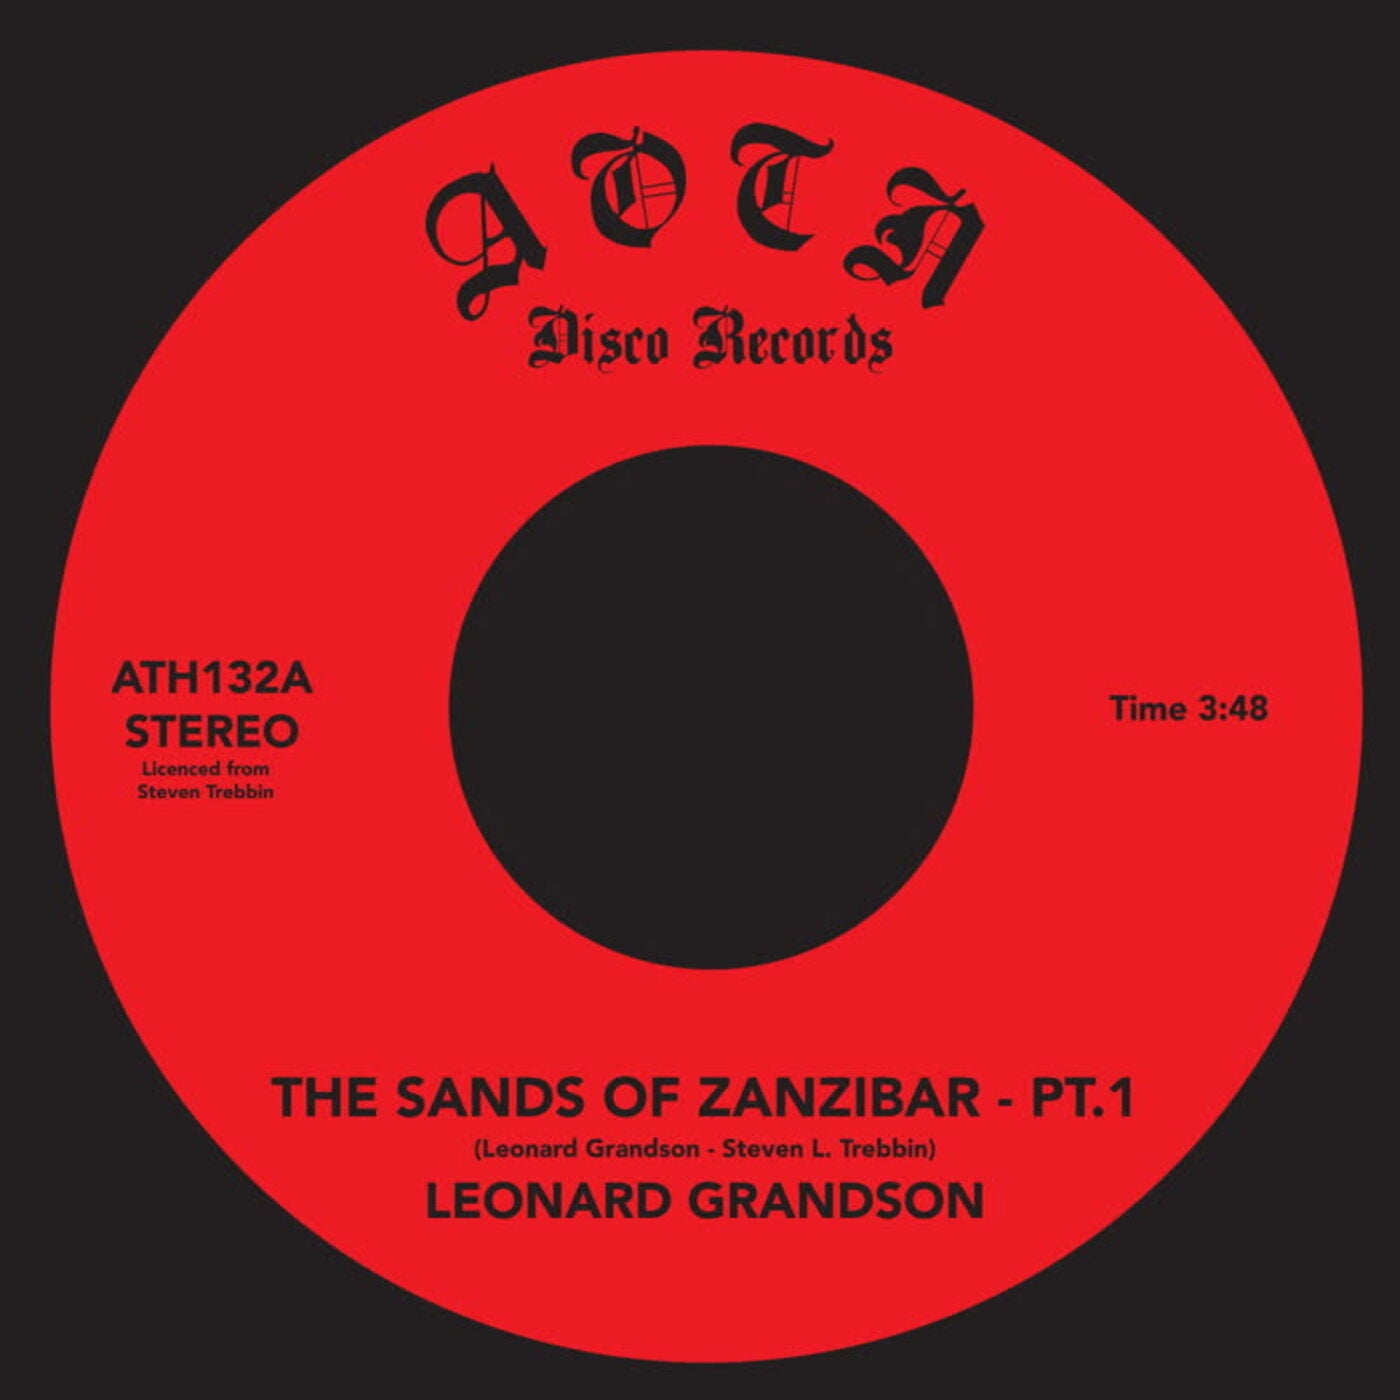 The Sands of Zanzibar